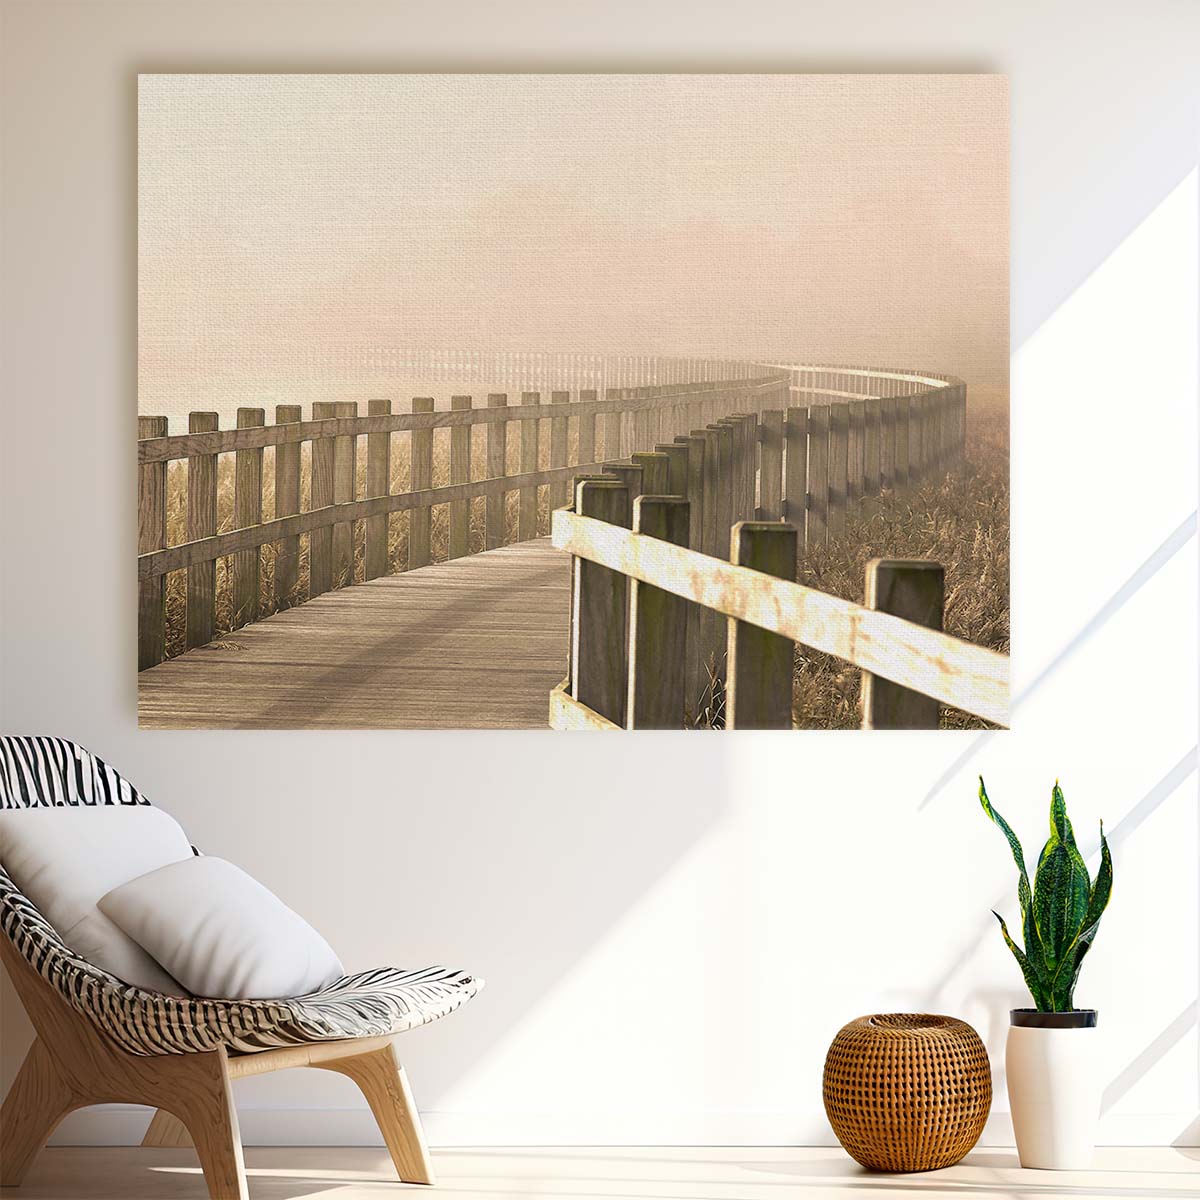 Misty Wooden Bridge Path, Jutland Denmark Wall Art by Luxuriance Designs. Made in USA.